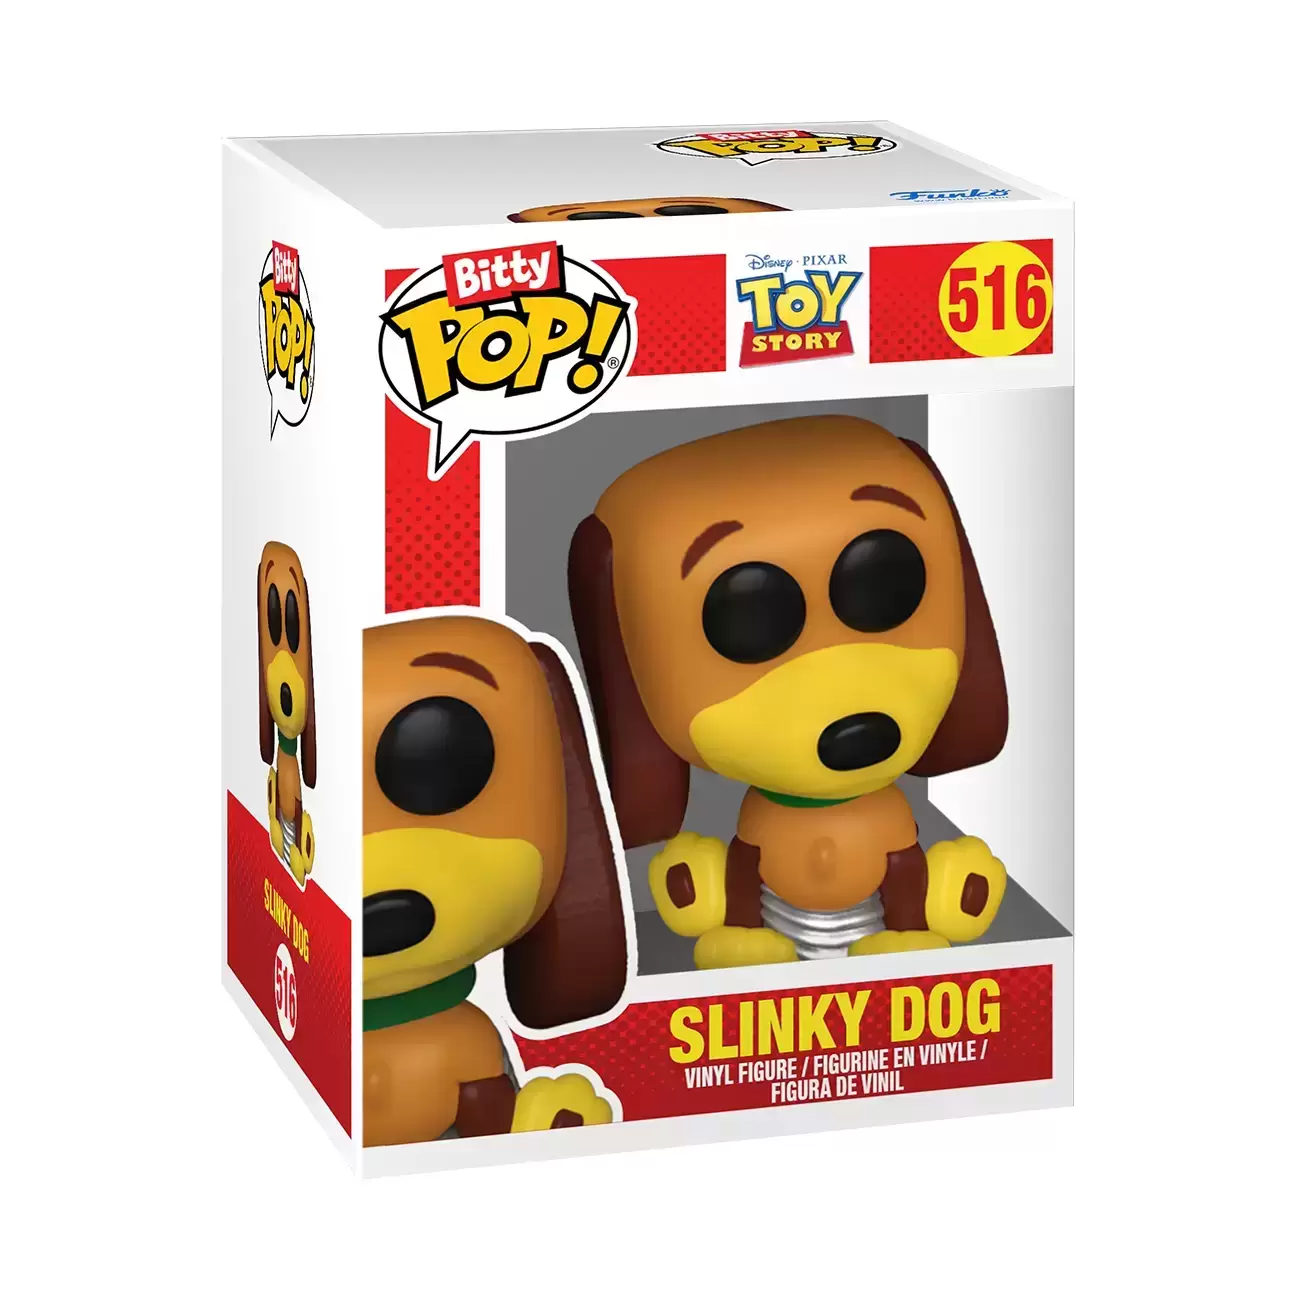 Bitty POP! - Toy Story - Slinky Dog